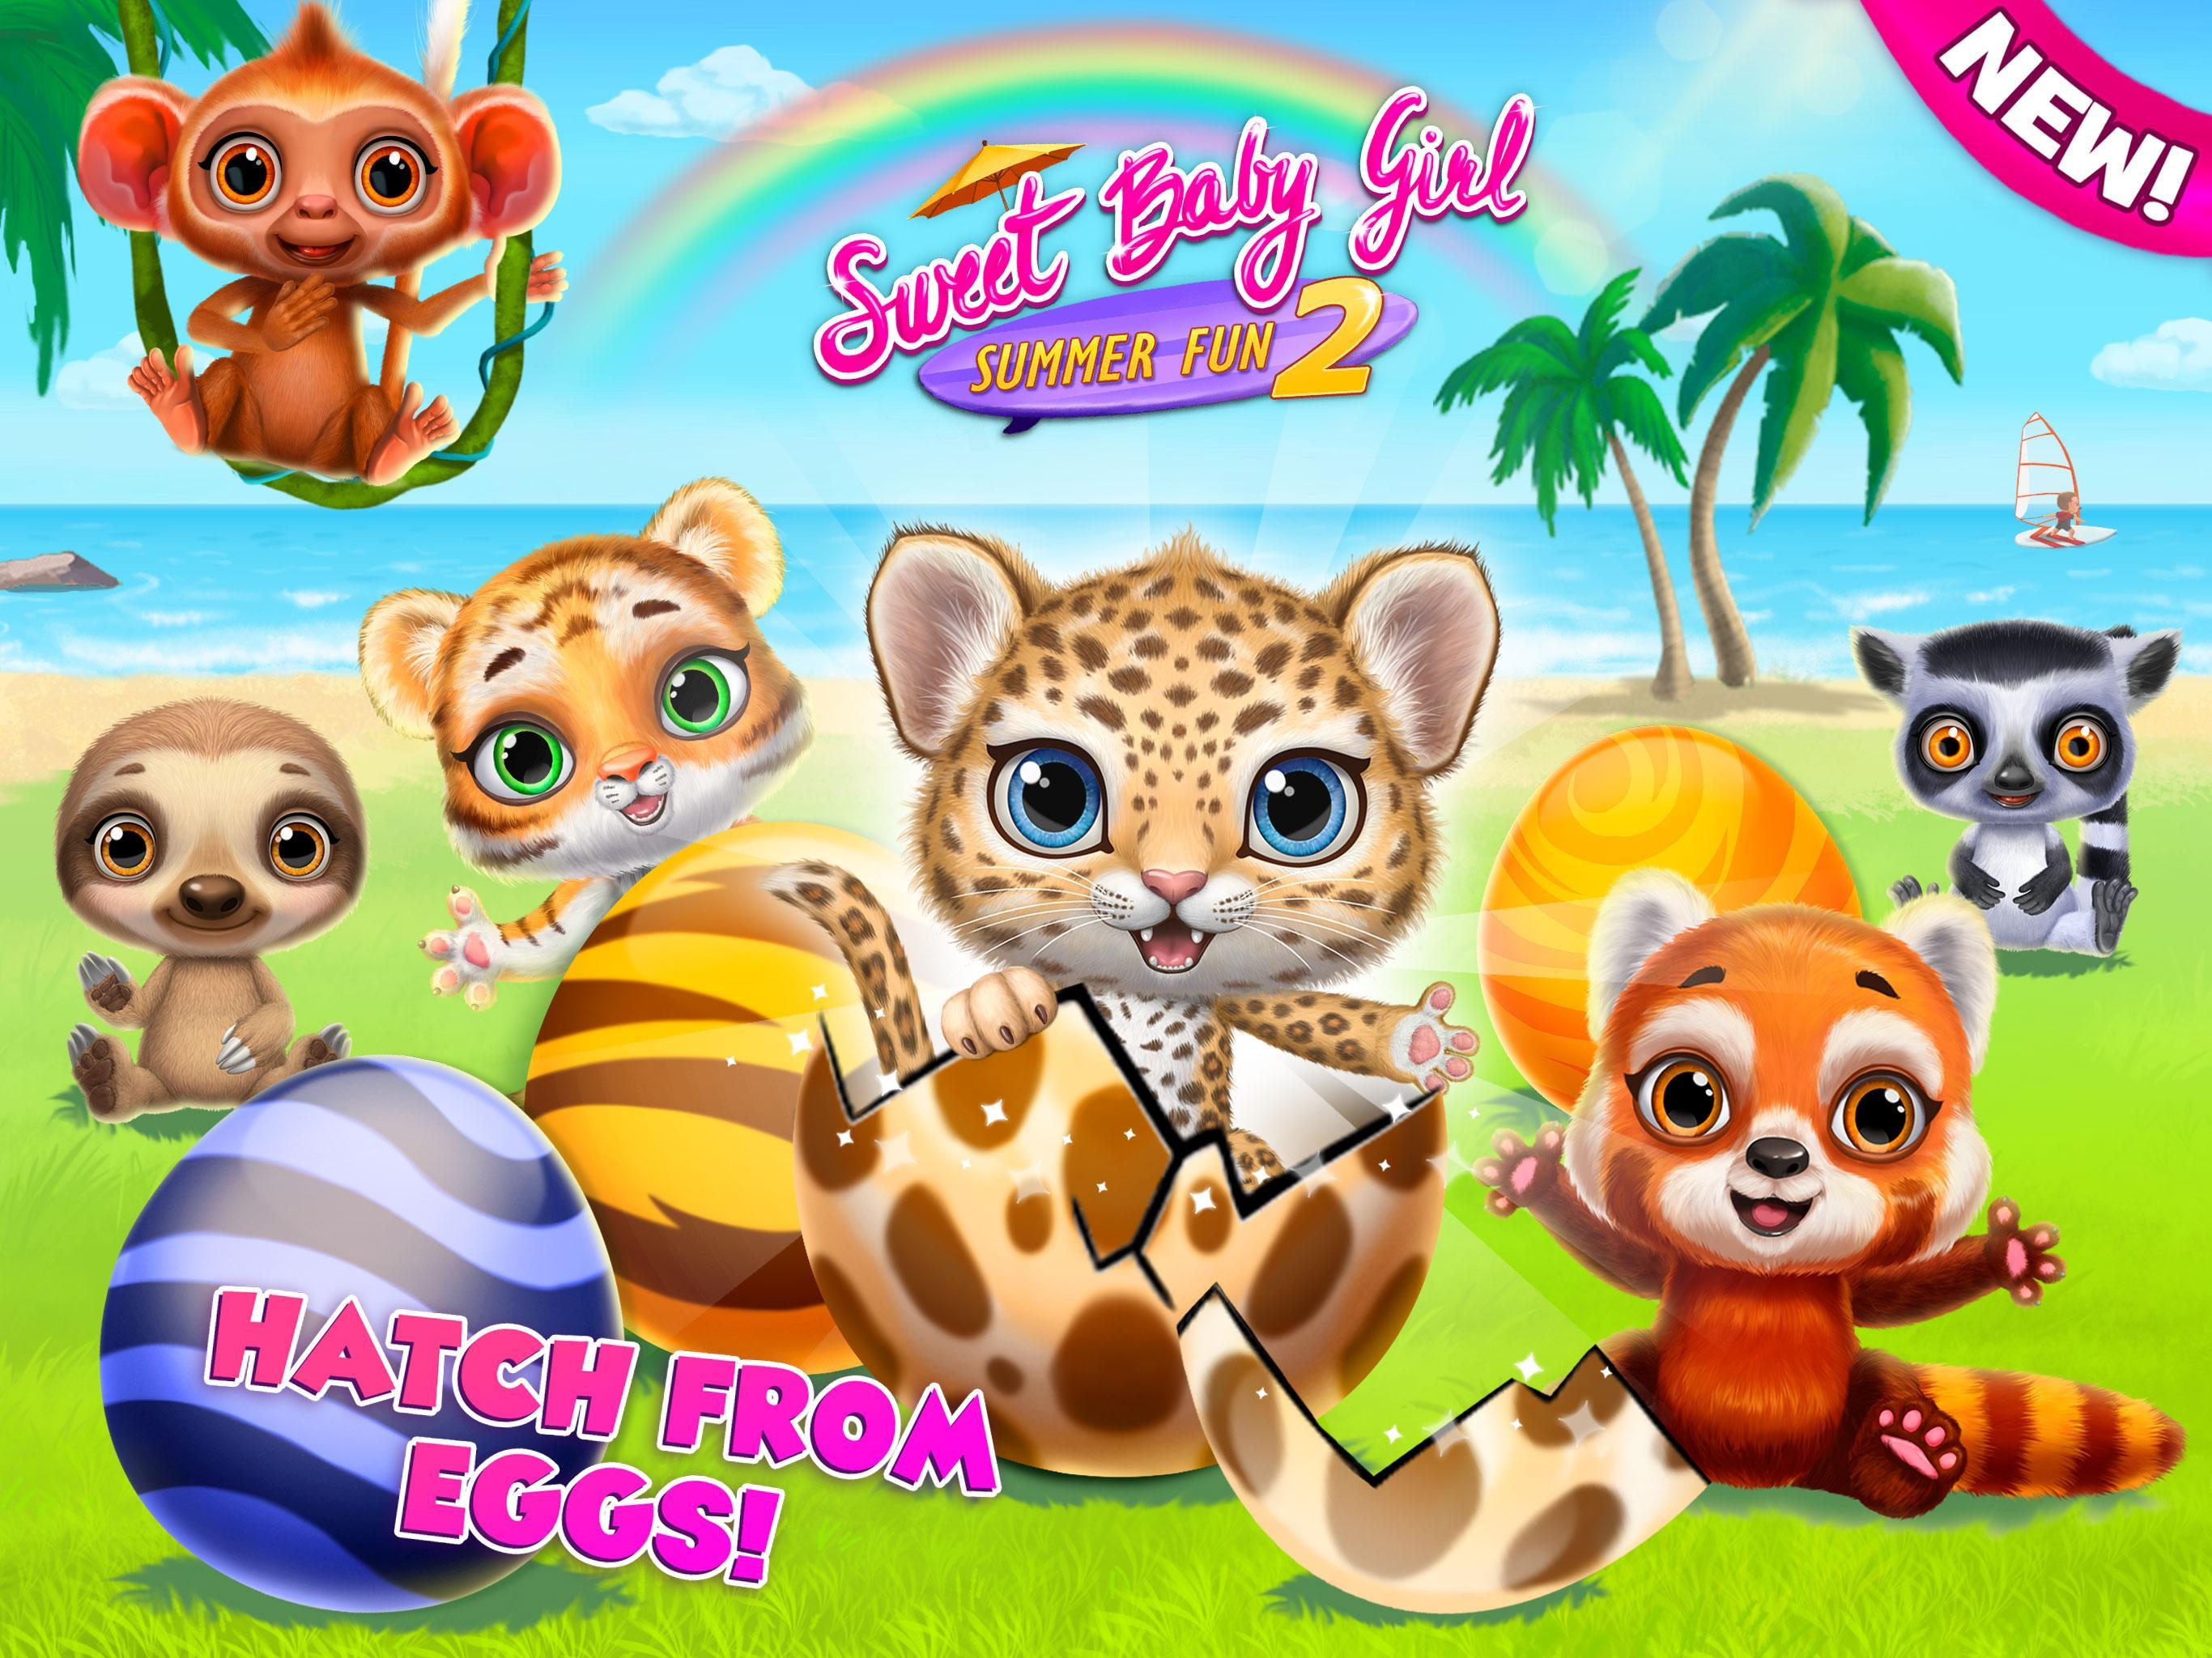 Sweet Baby Girl Summer Fun 2 - Sunny Makeover Game 7.0.1511 Screenshot 9